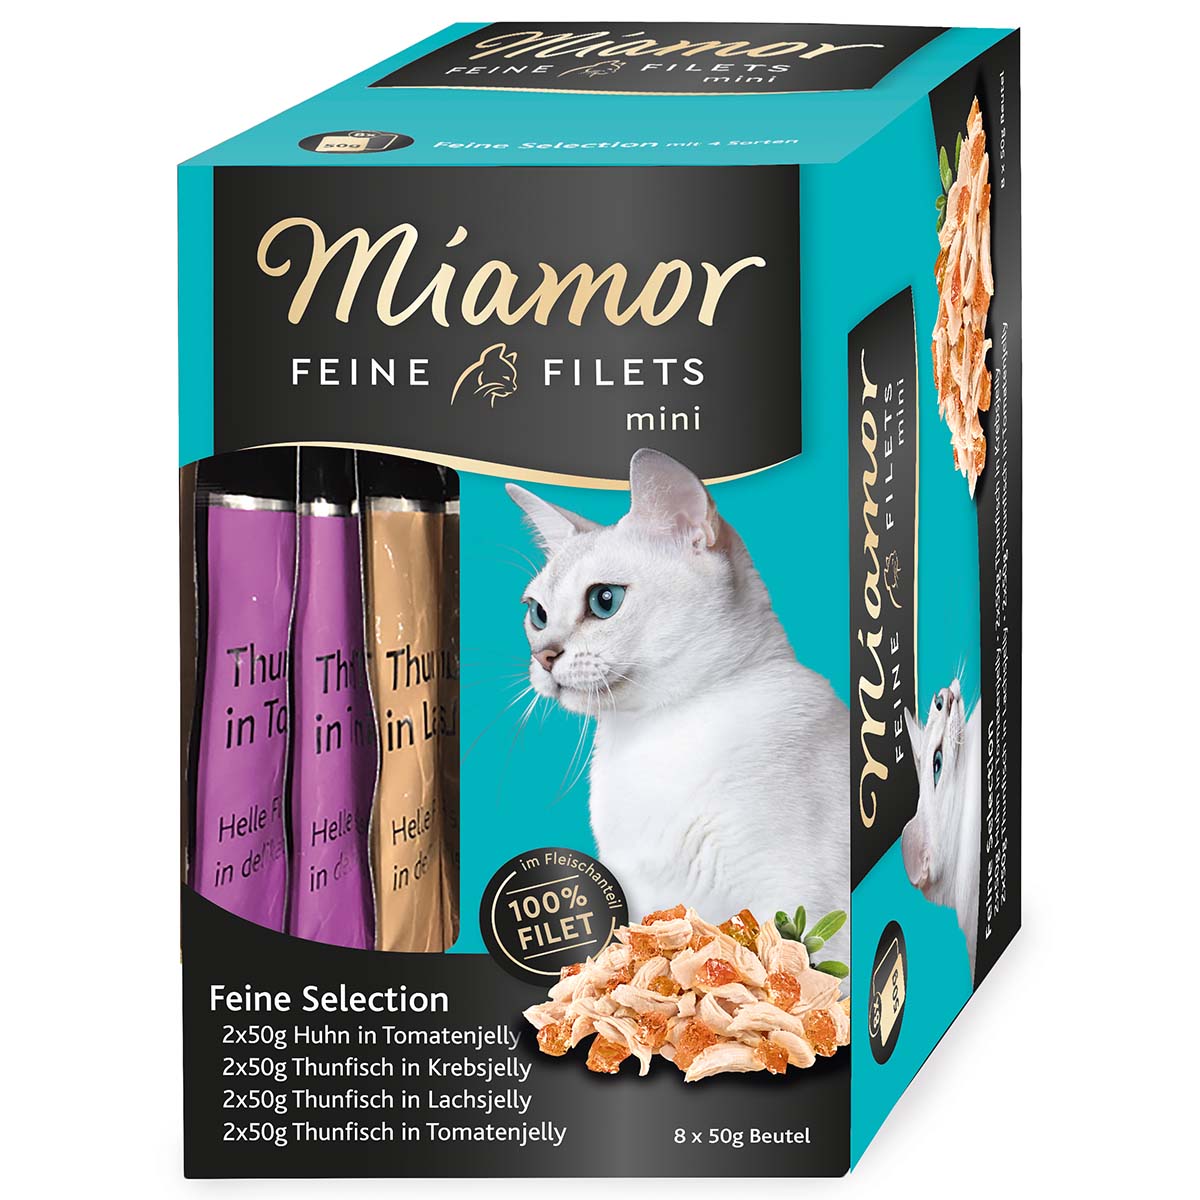 miamor feine filets mini multibox feine selection